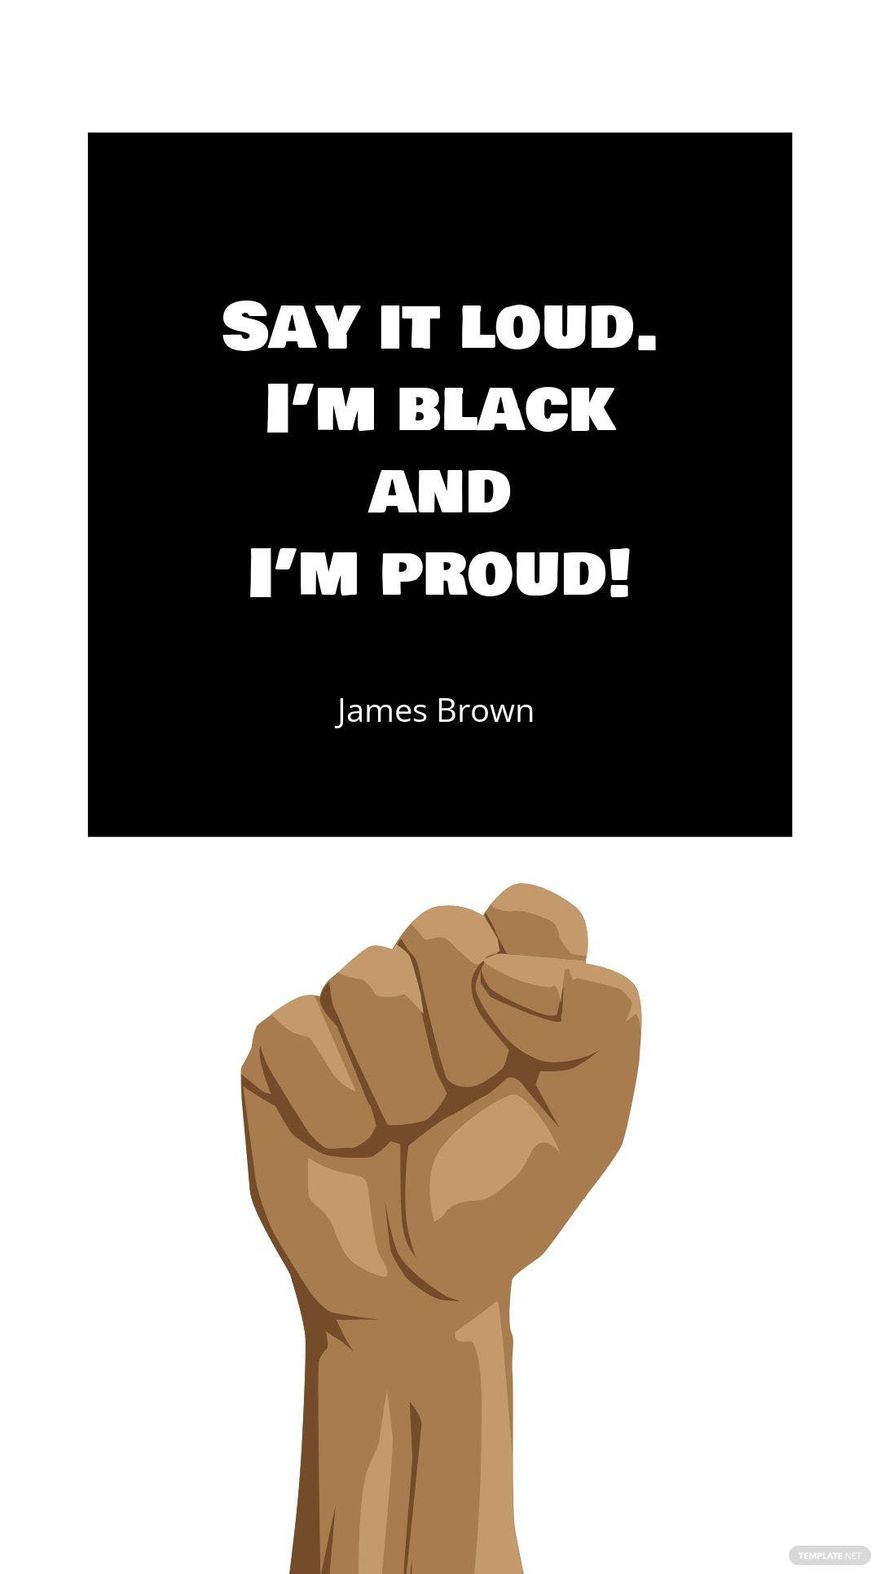 James Brown - Say it loud. I’m black and I’m proud! in JPG